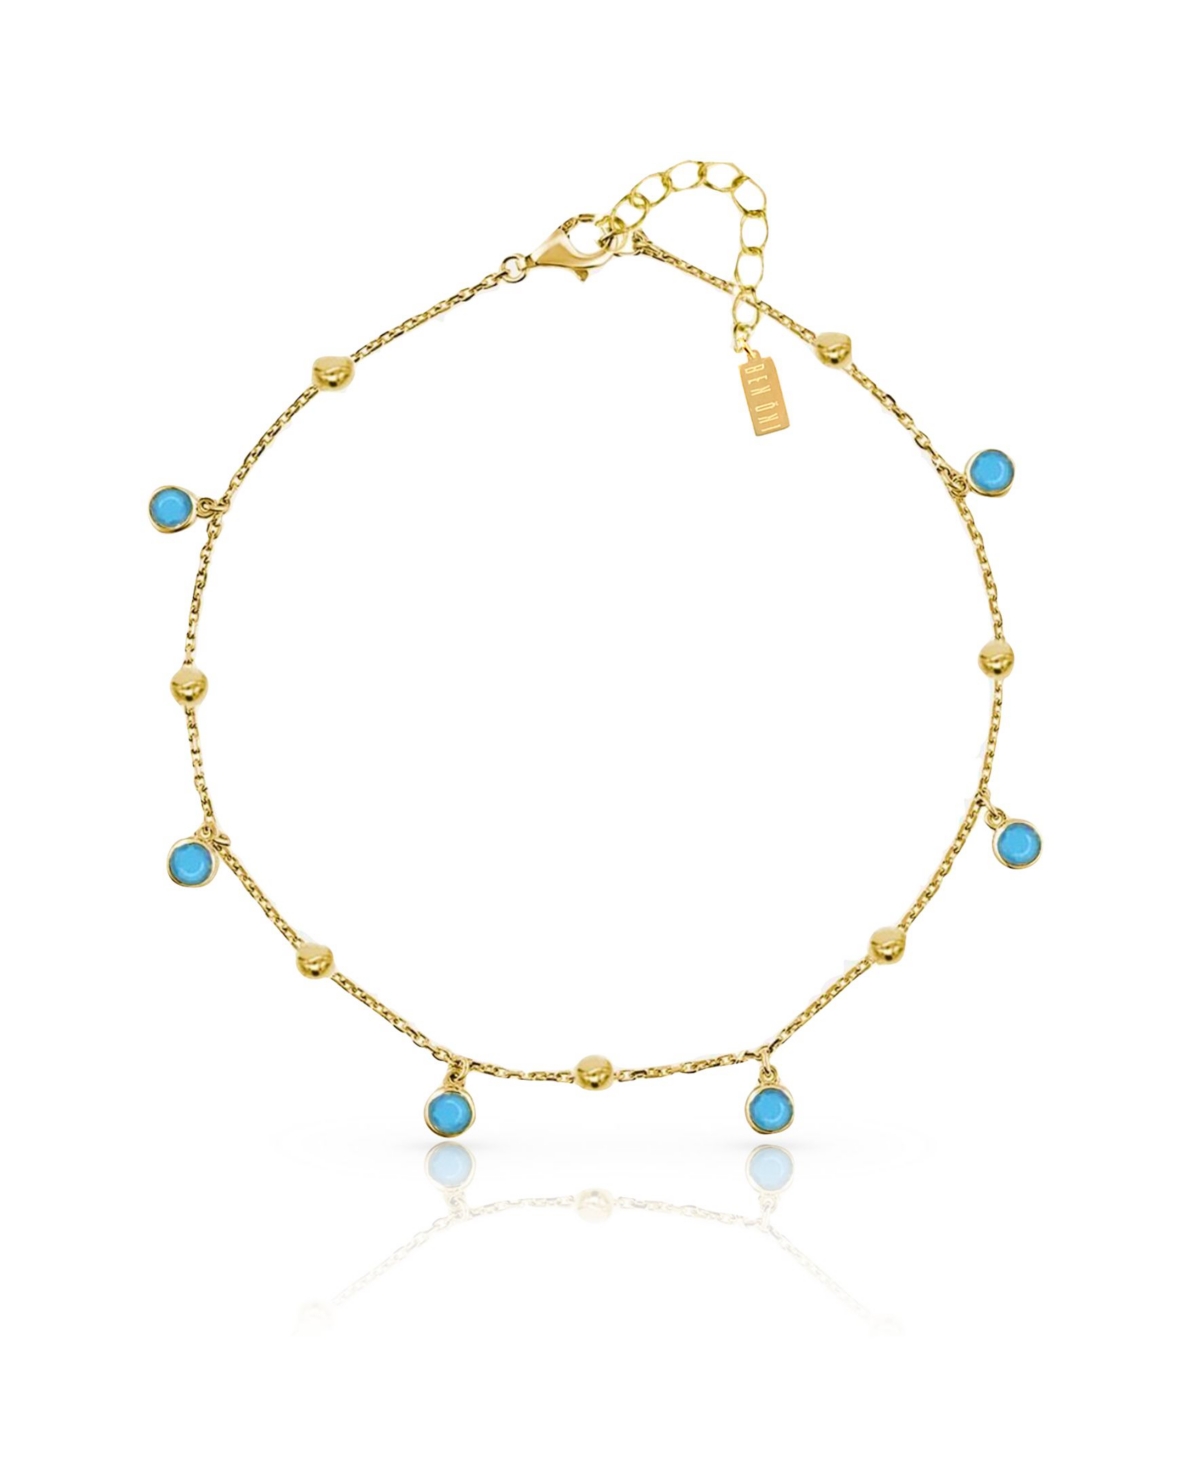 18k Gold Vermeil Cubic Zirconia or Turquoise Bezel Charm Bracelet - Turquoise